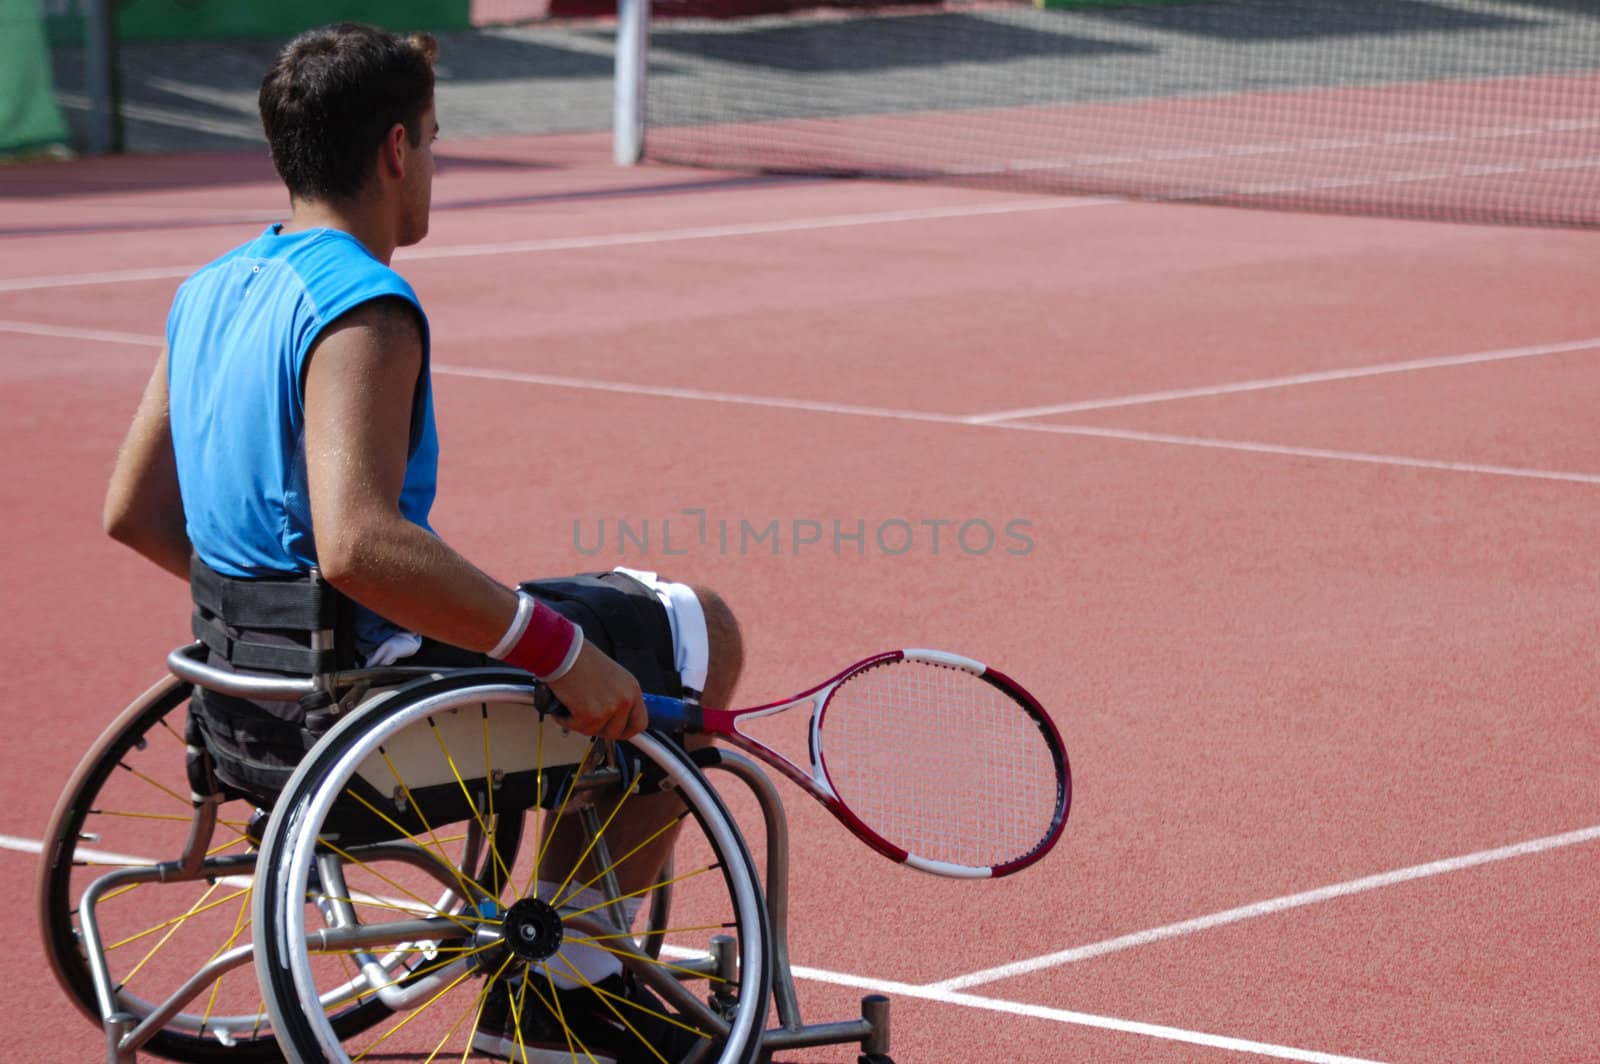 Wheelchair athlete by Bateleur